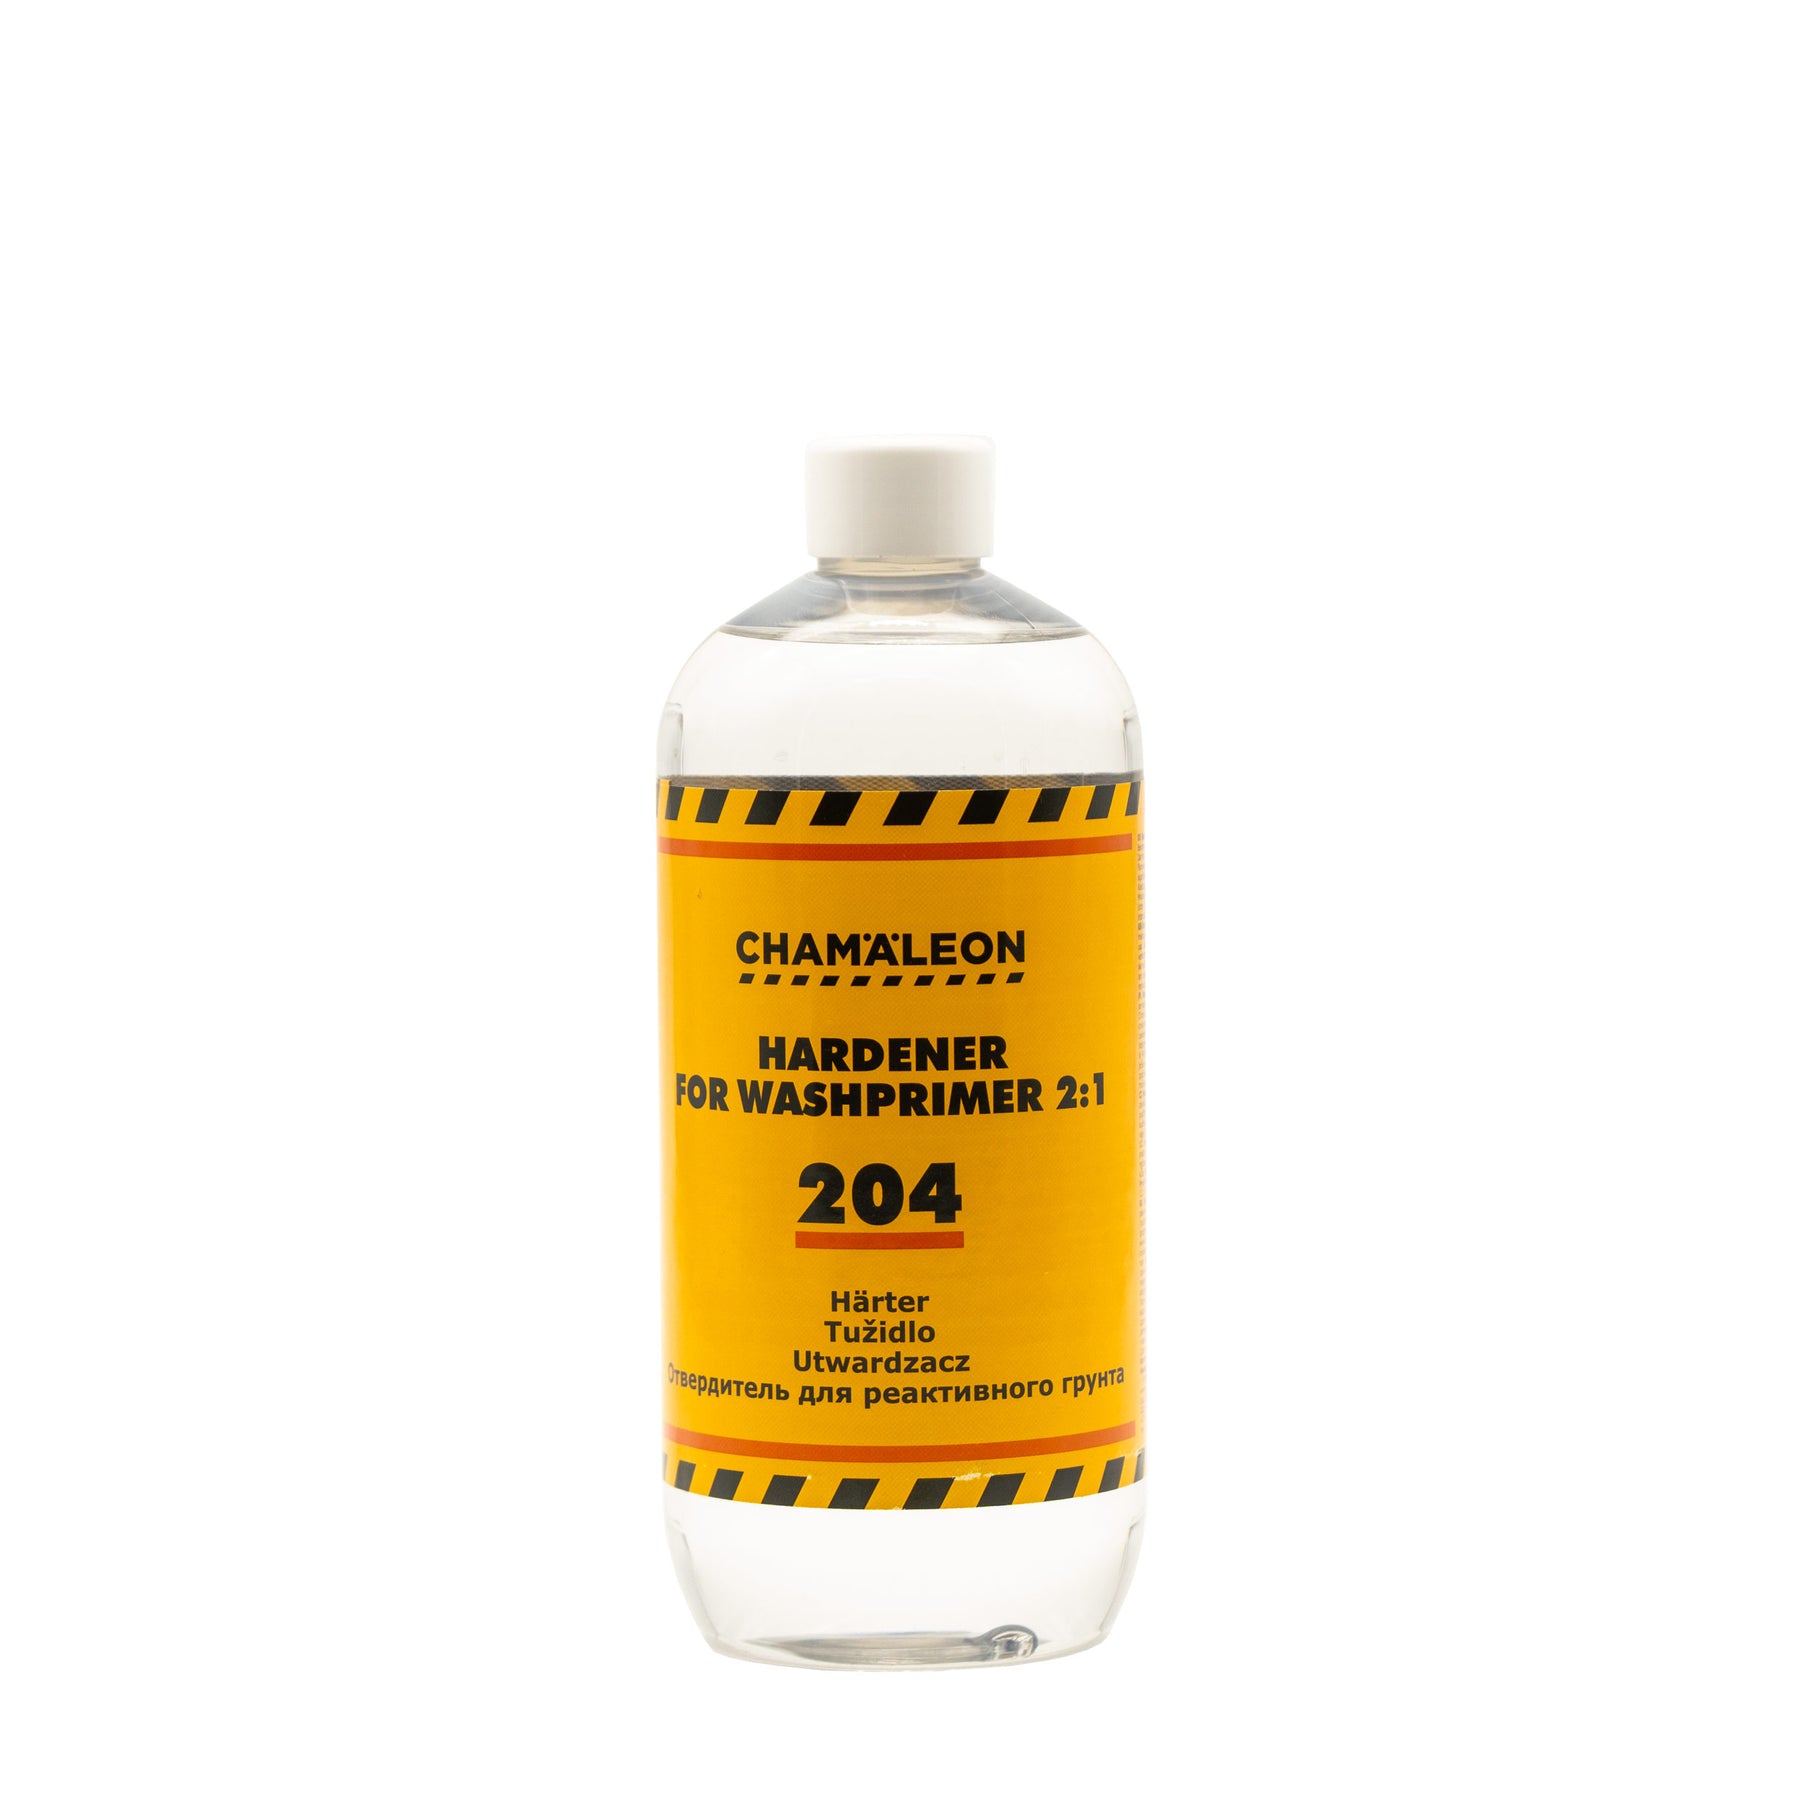 CHAMALEON Hardener 204 for Wash Primer 404